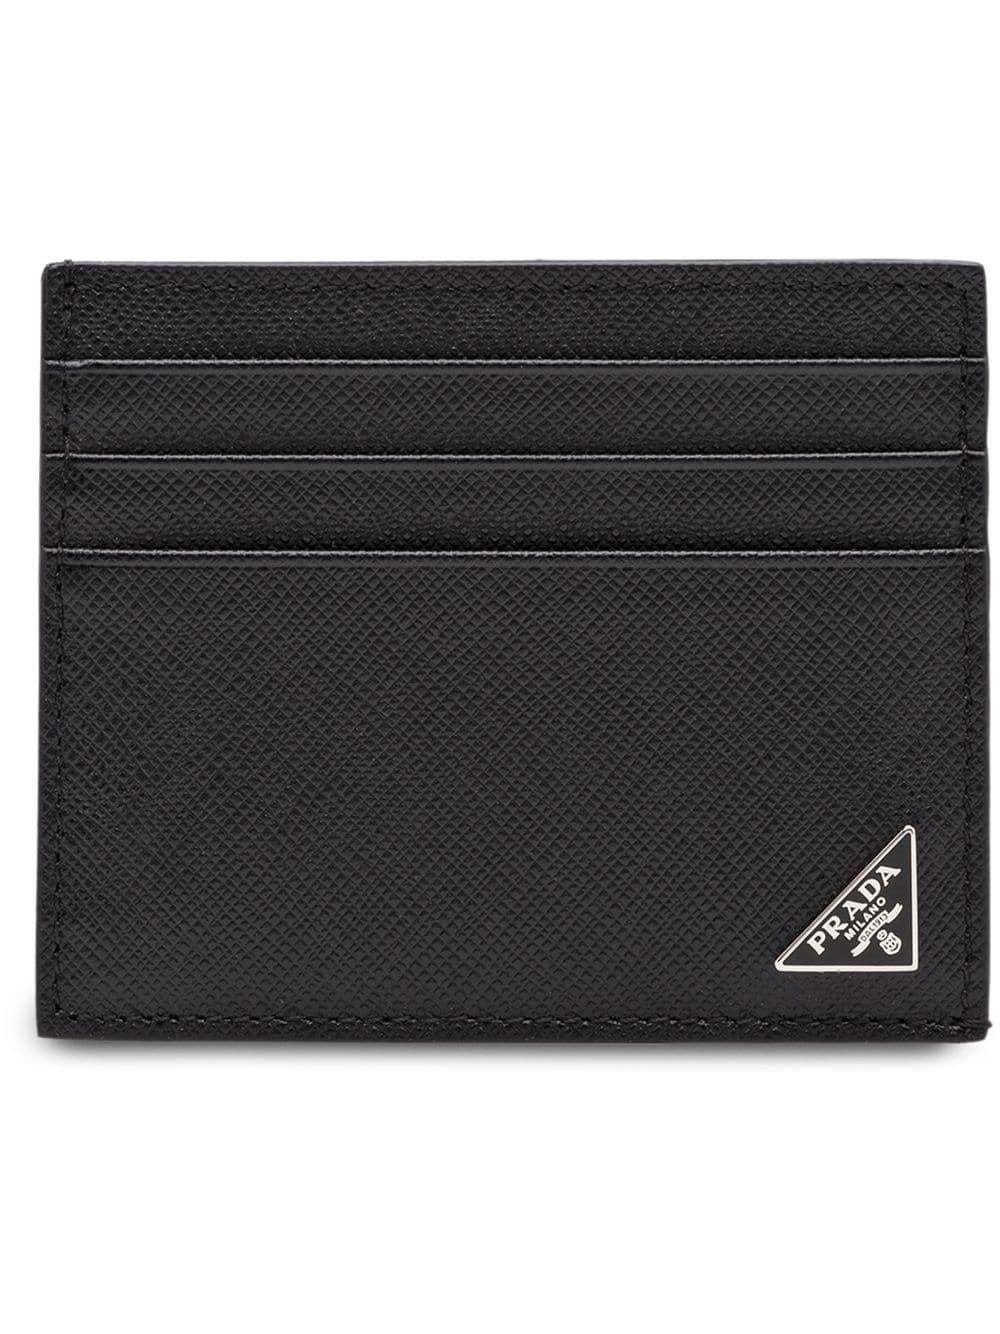 Prada Black Leather Card Holder for Men - Lyst